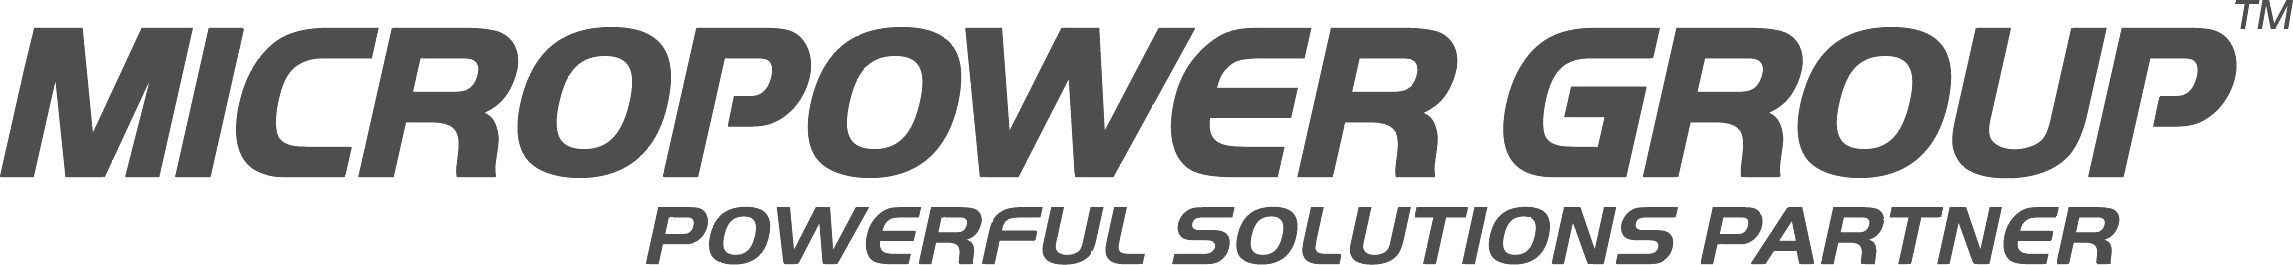 Micropower group logo grey